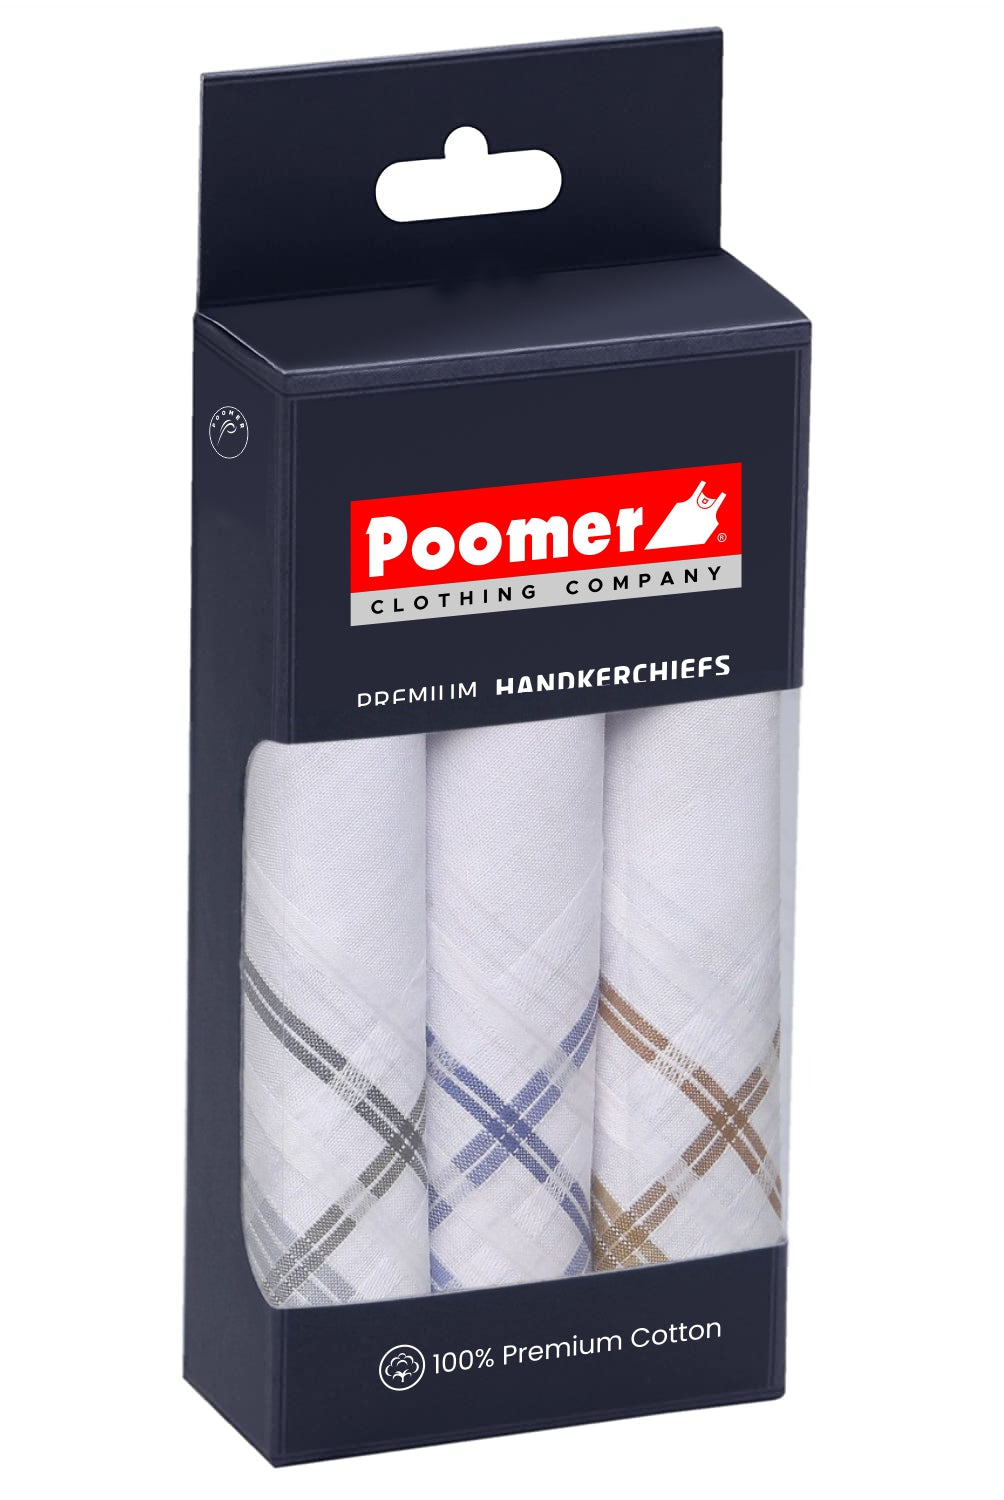 Poomer on X: Poomer Royal Vest makes all men stay cool forever